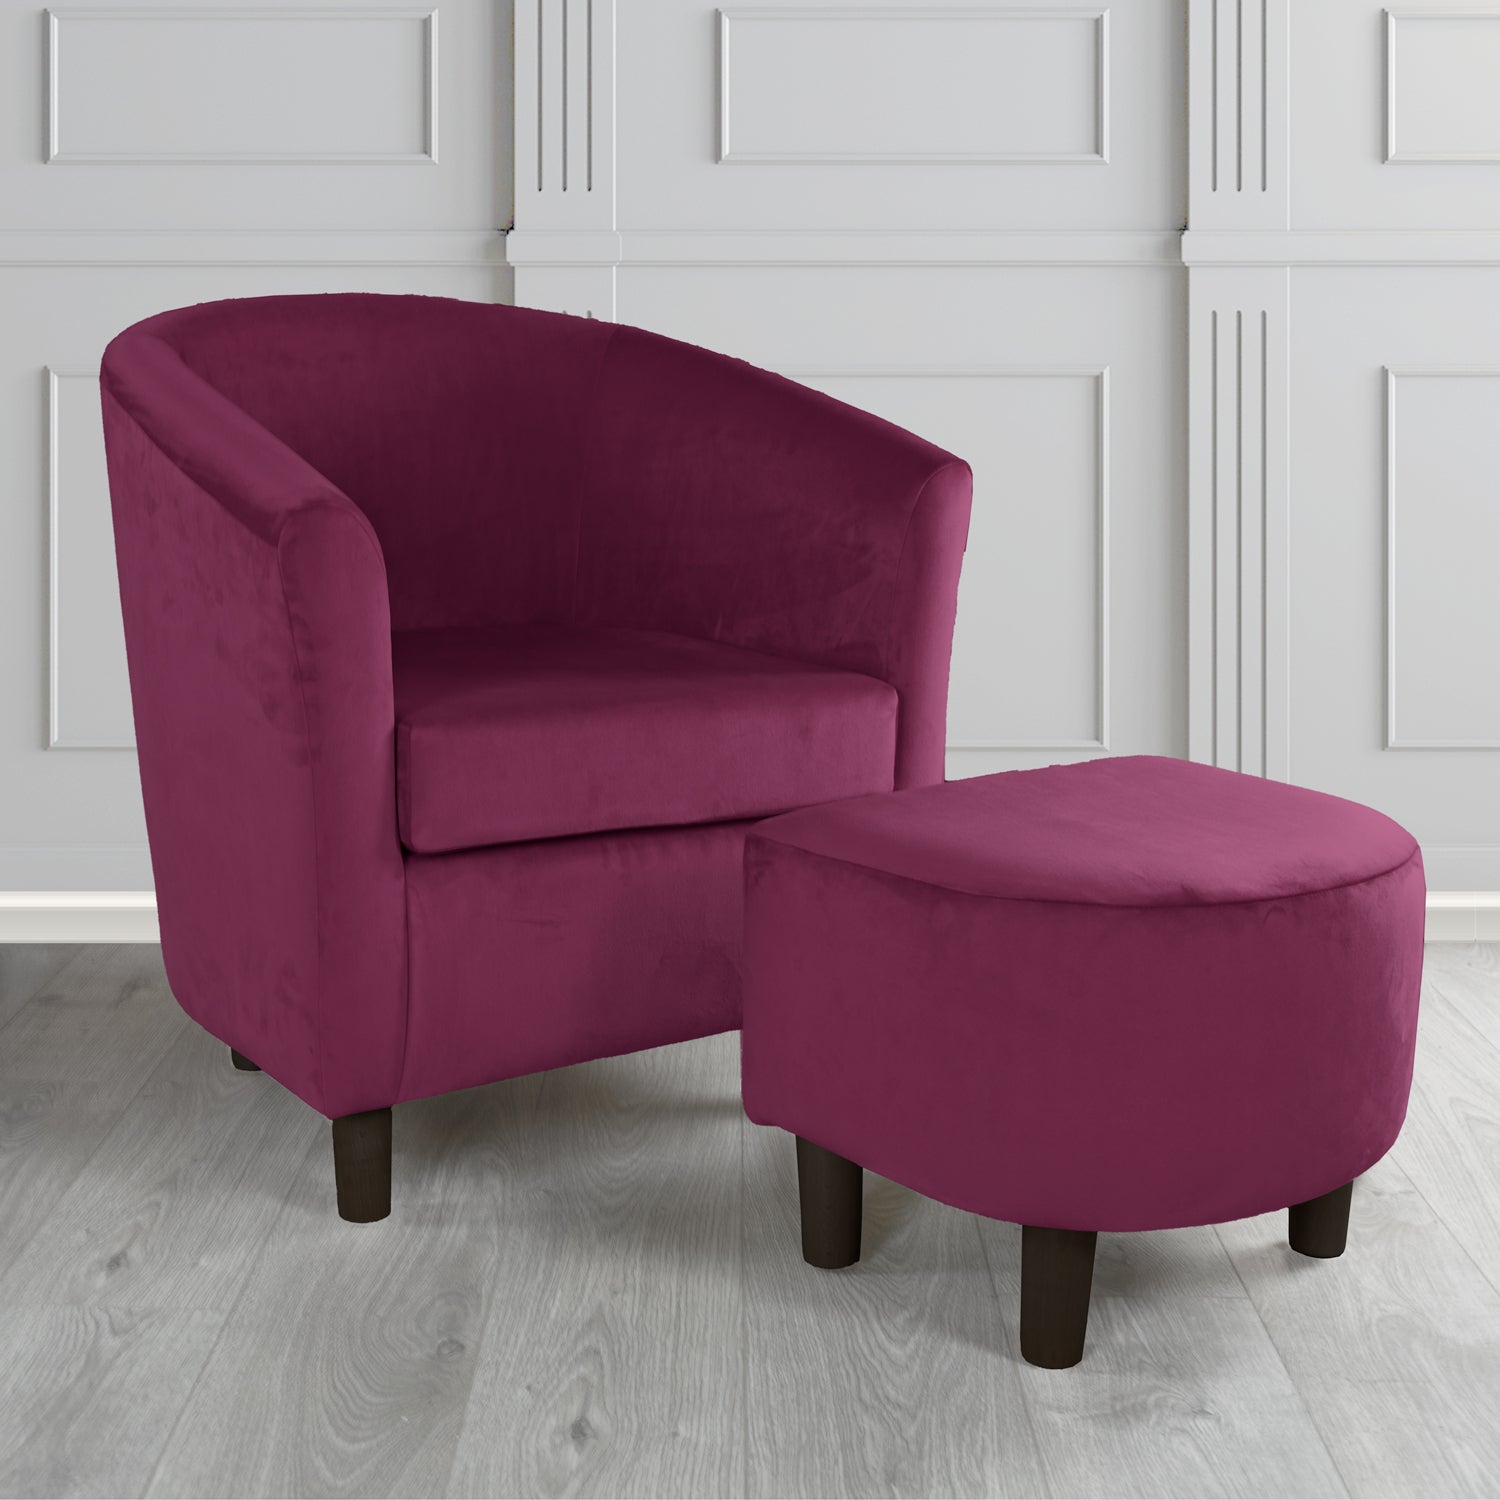 Tuscany Monaco Amethyst Plush Velvet Plain Fabric Tub Chair with Footstool Set (6592003538986)